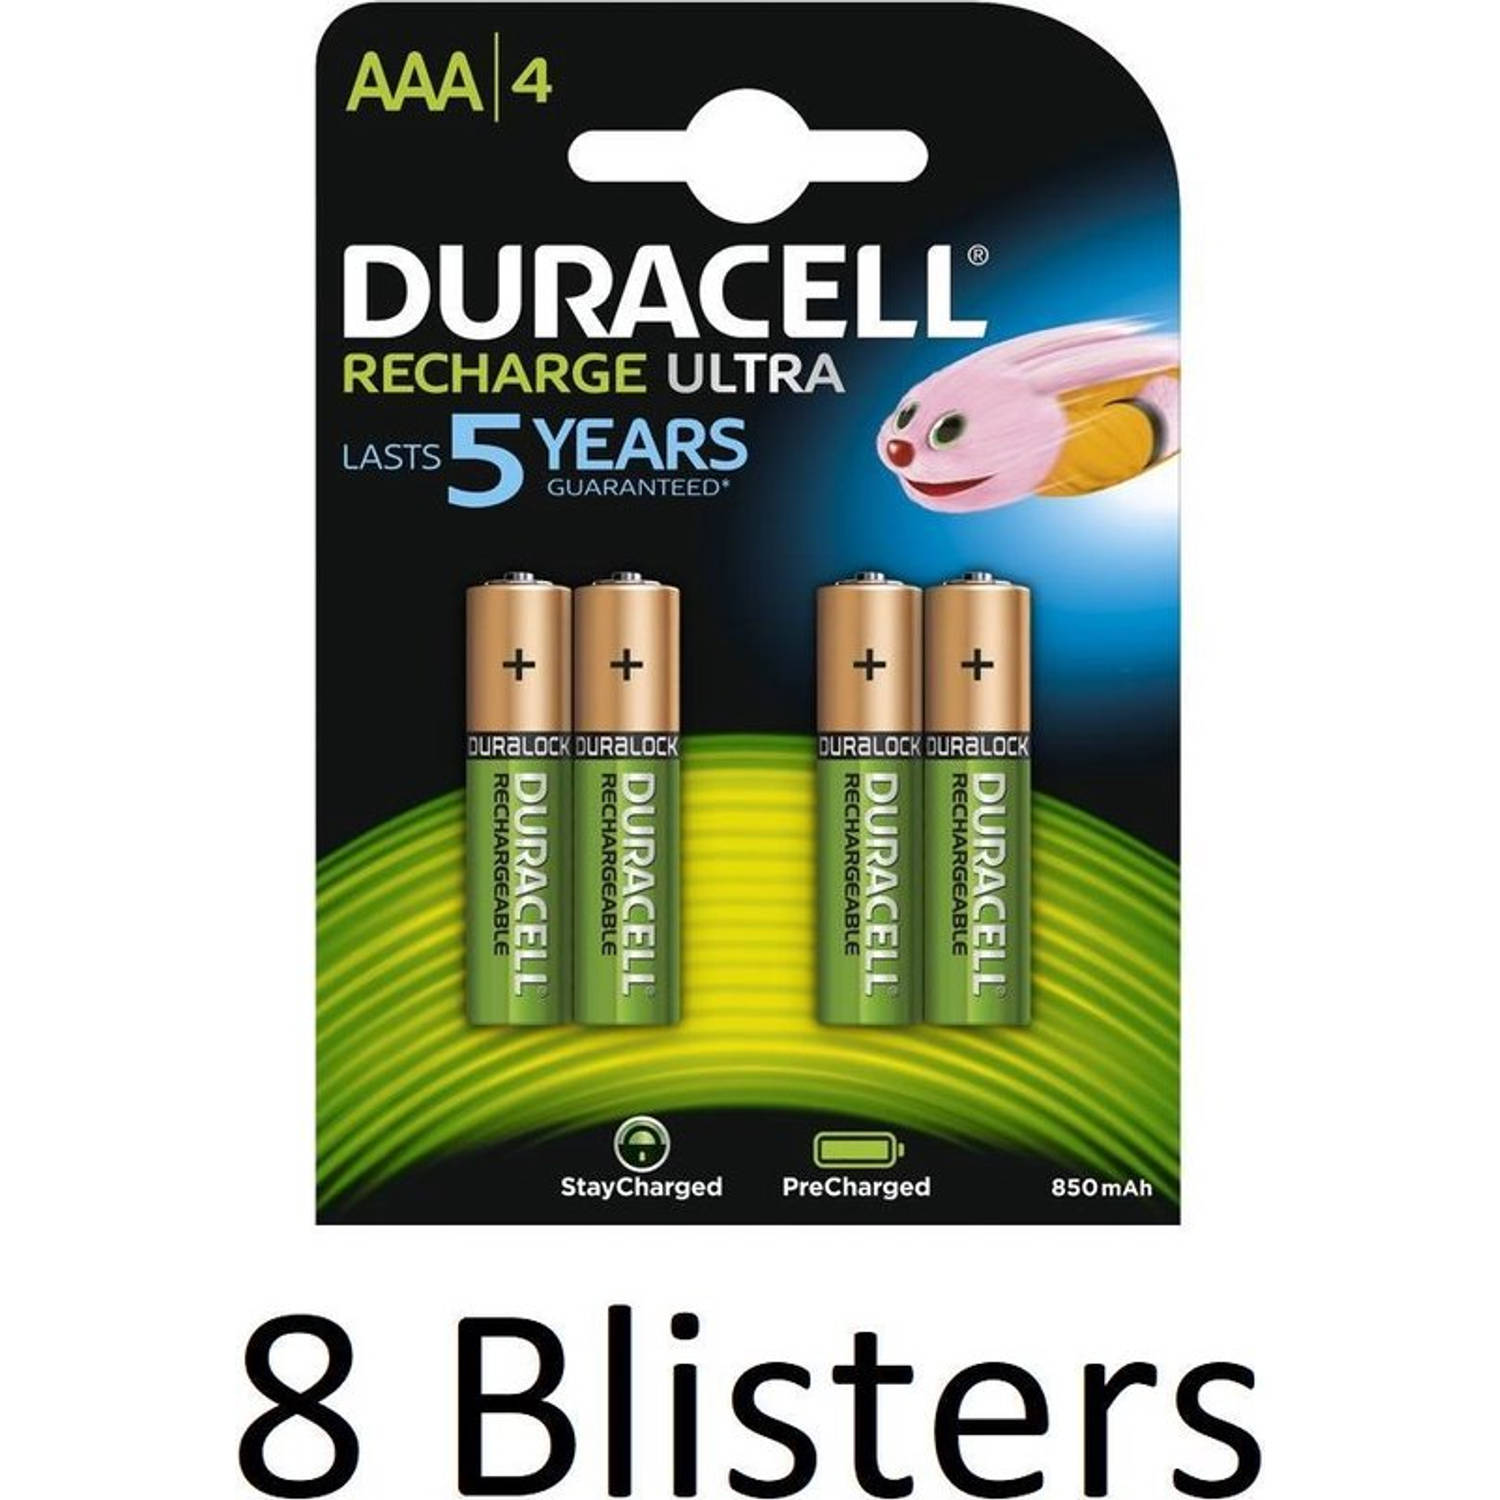 32 Stuks (8 Blisters a 4 st) Duracell AAA Oplaadbare Batterijen - 800 mAh